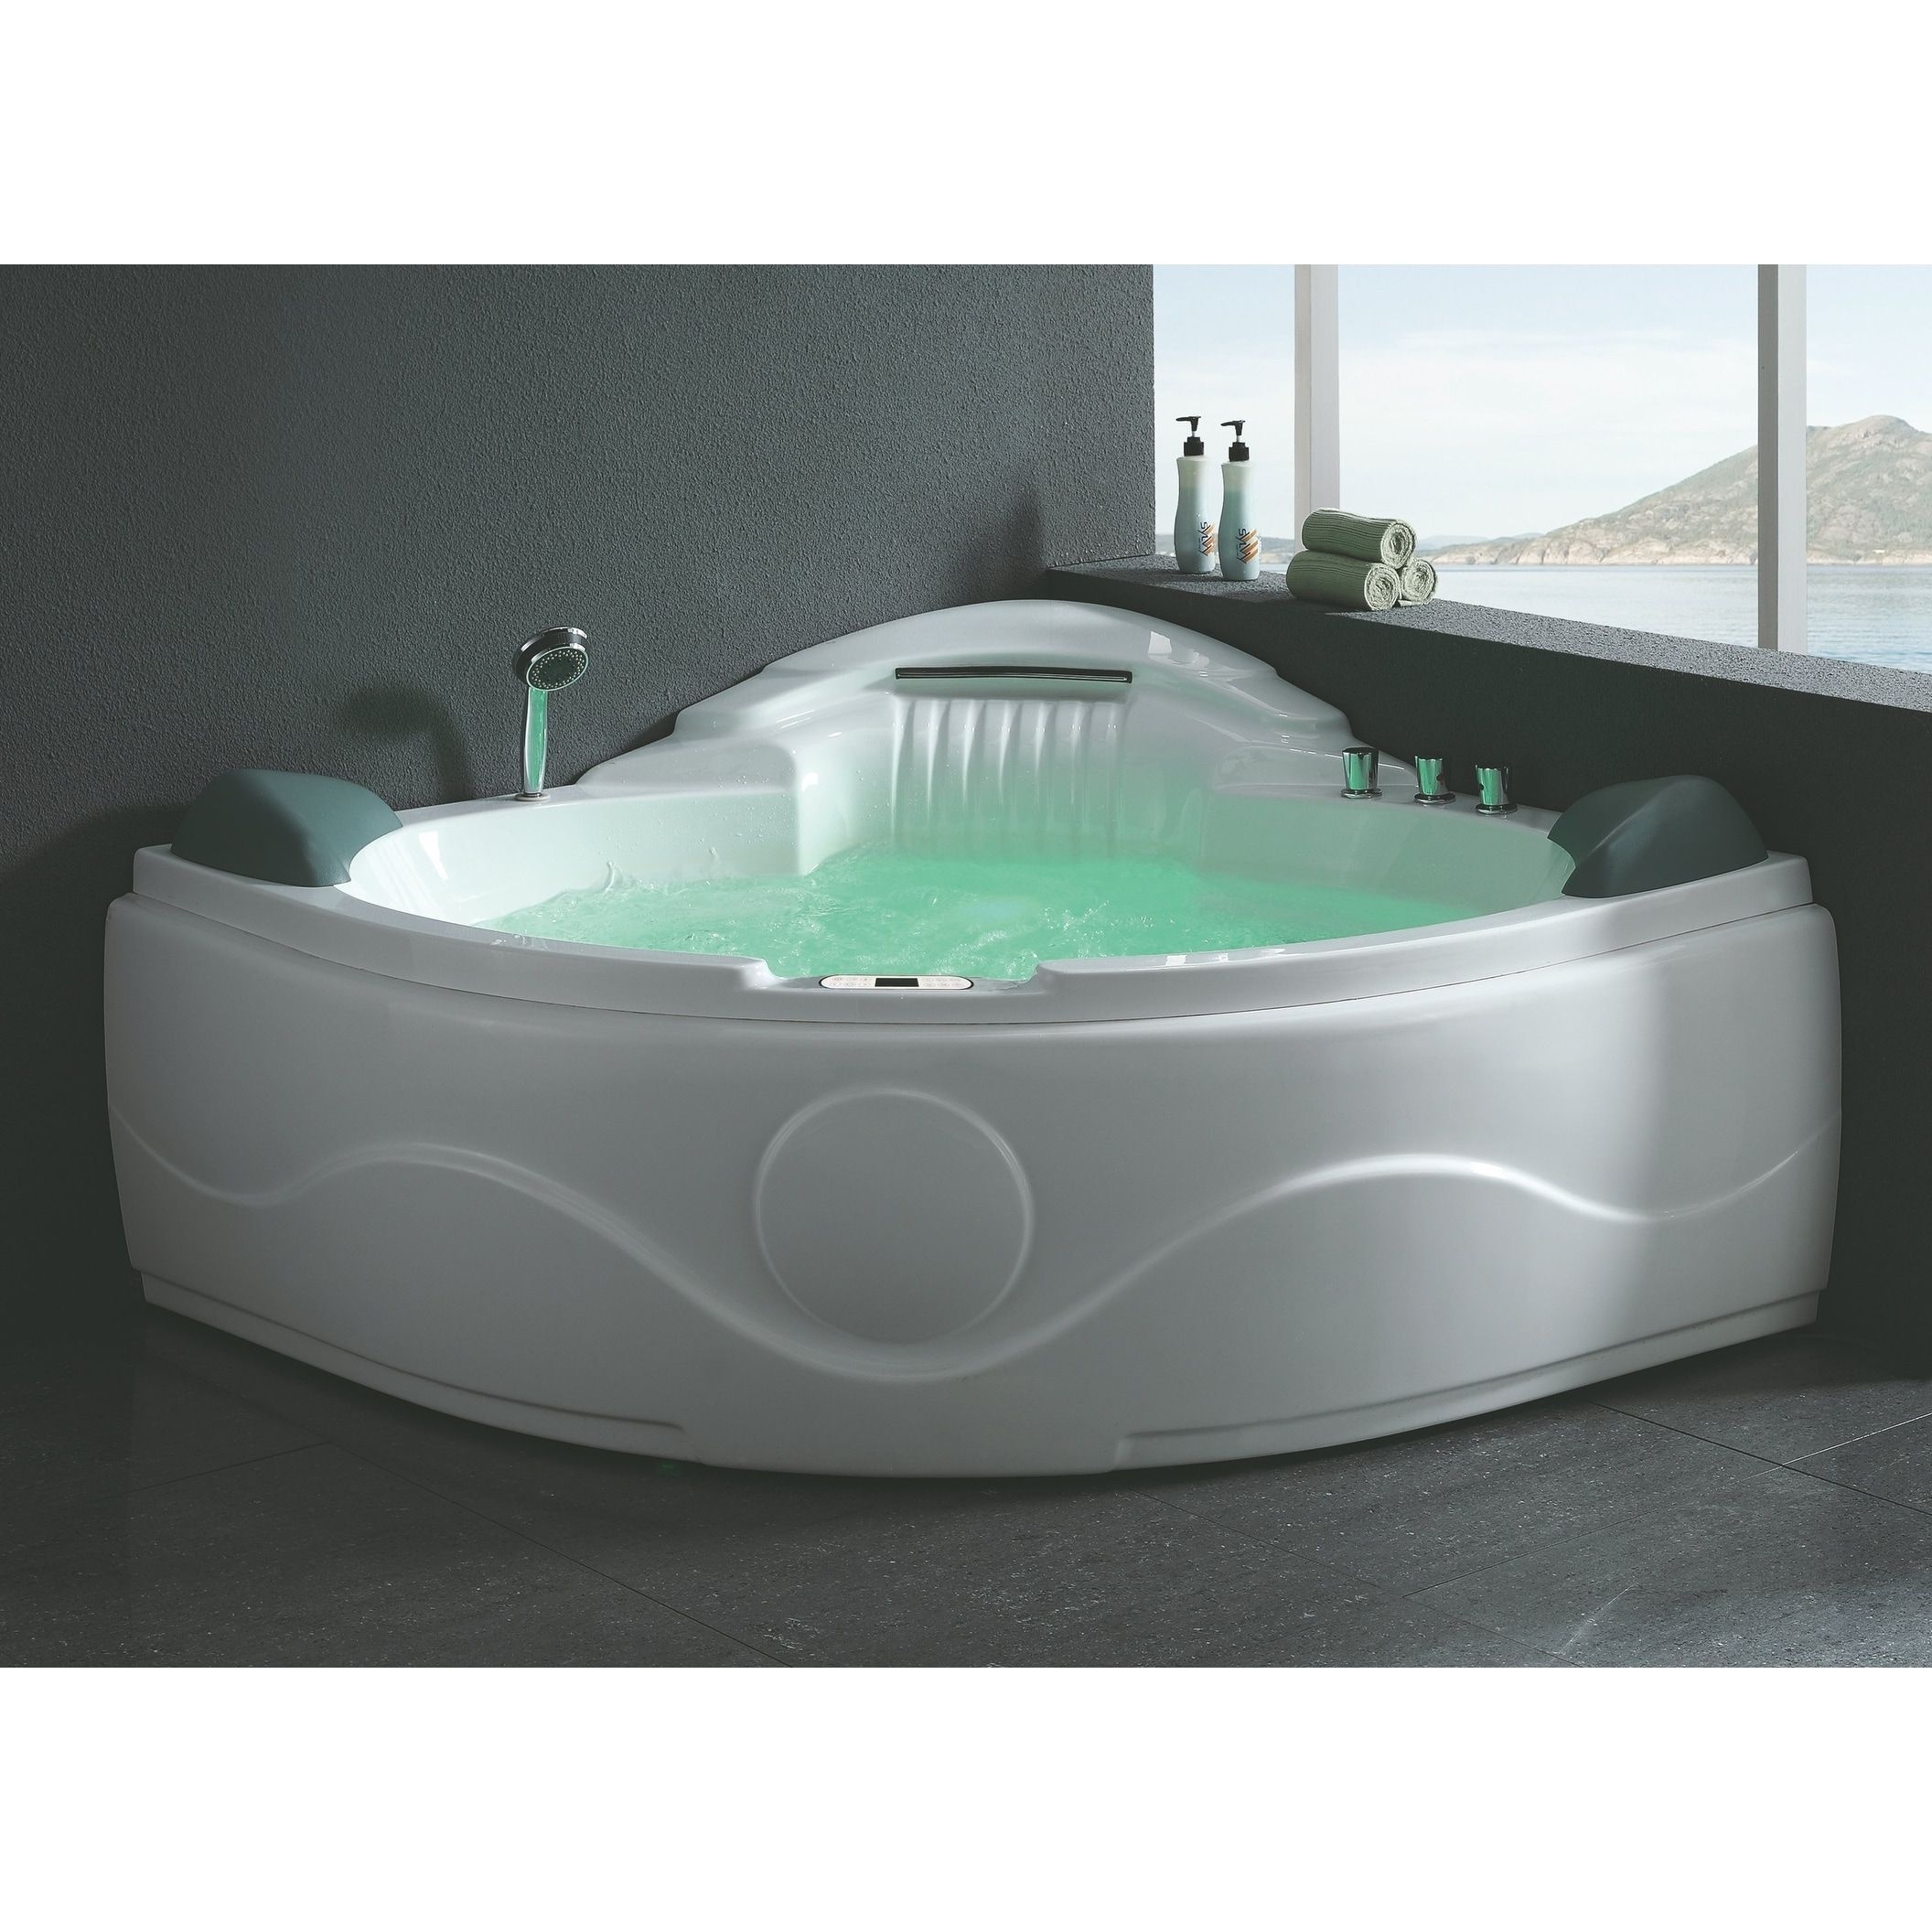 Futuristic Corner Bathtub with a Whirlpool